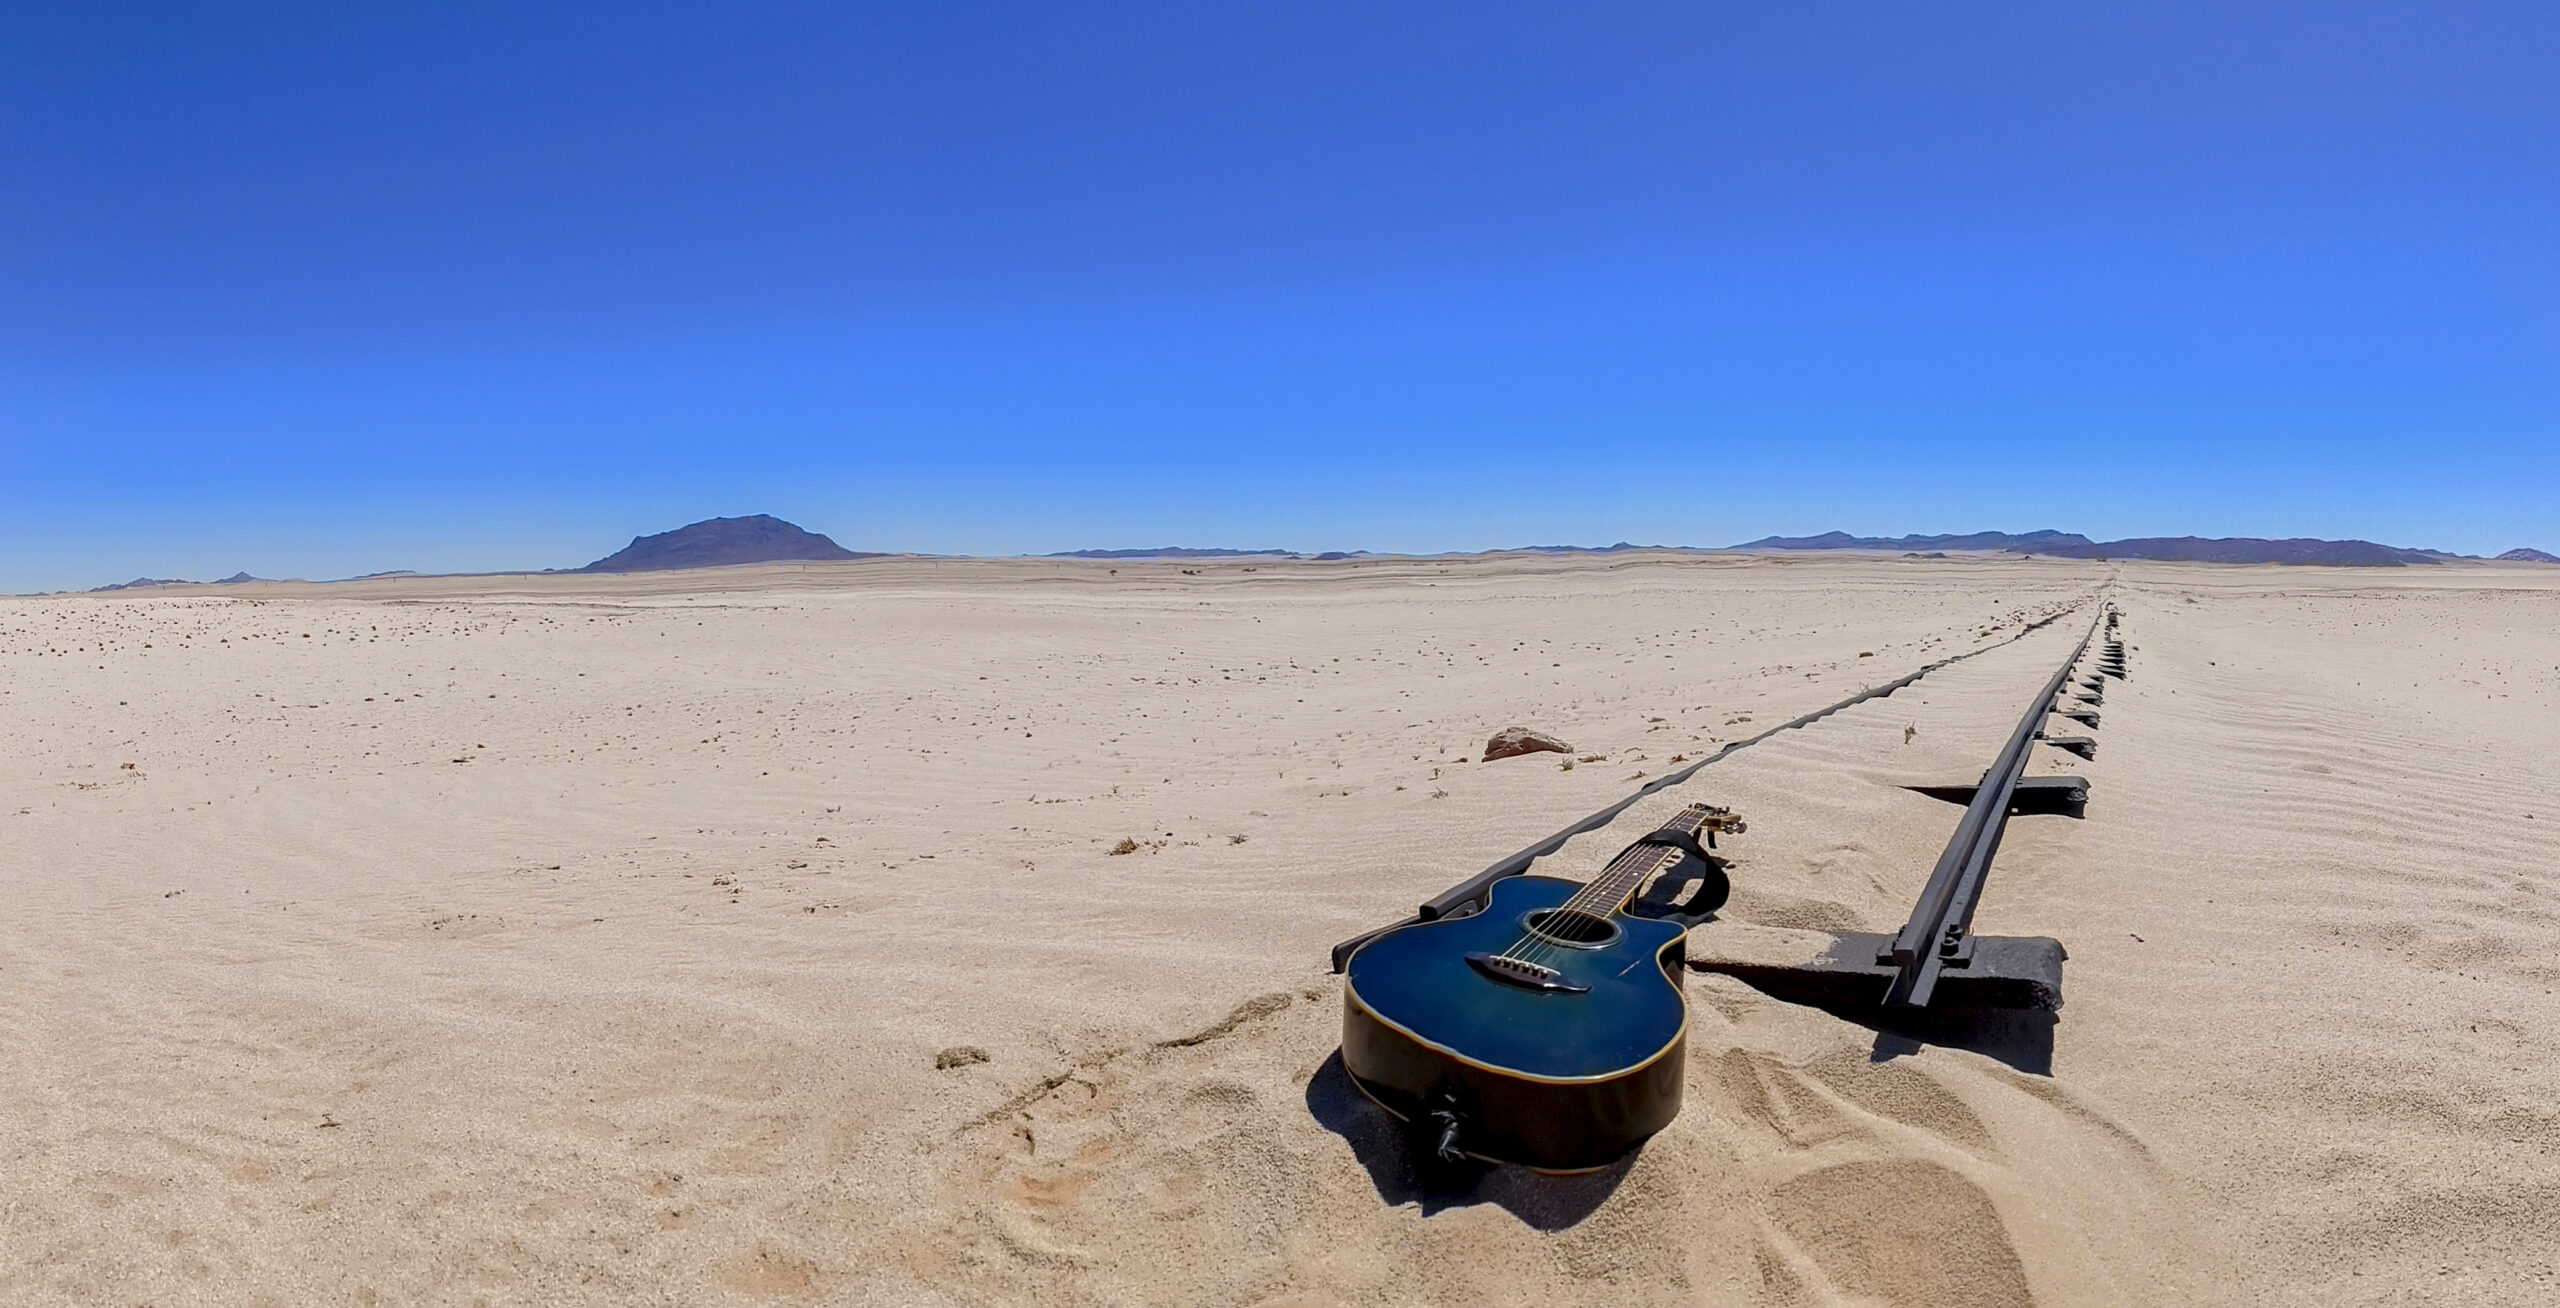 Guitar on desert floor at end of old railway tracks